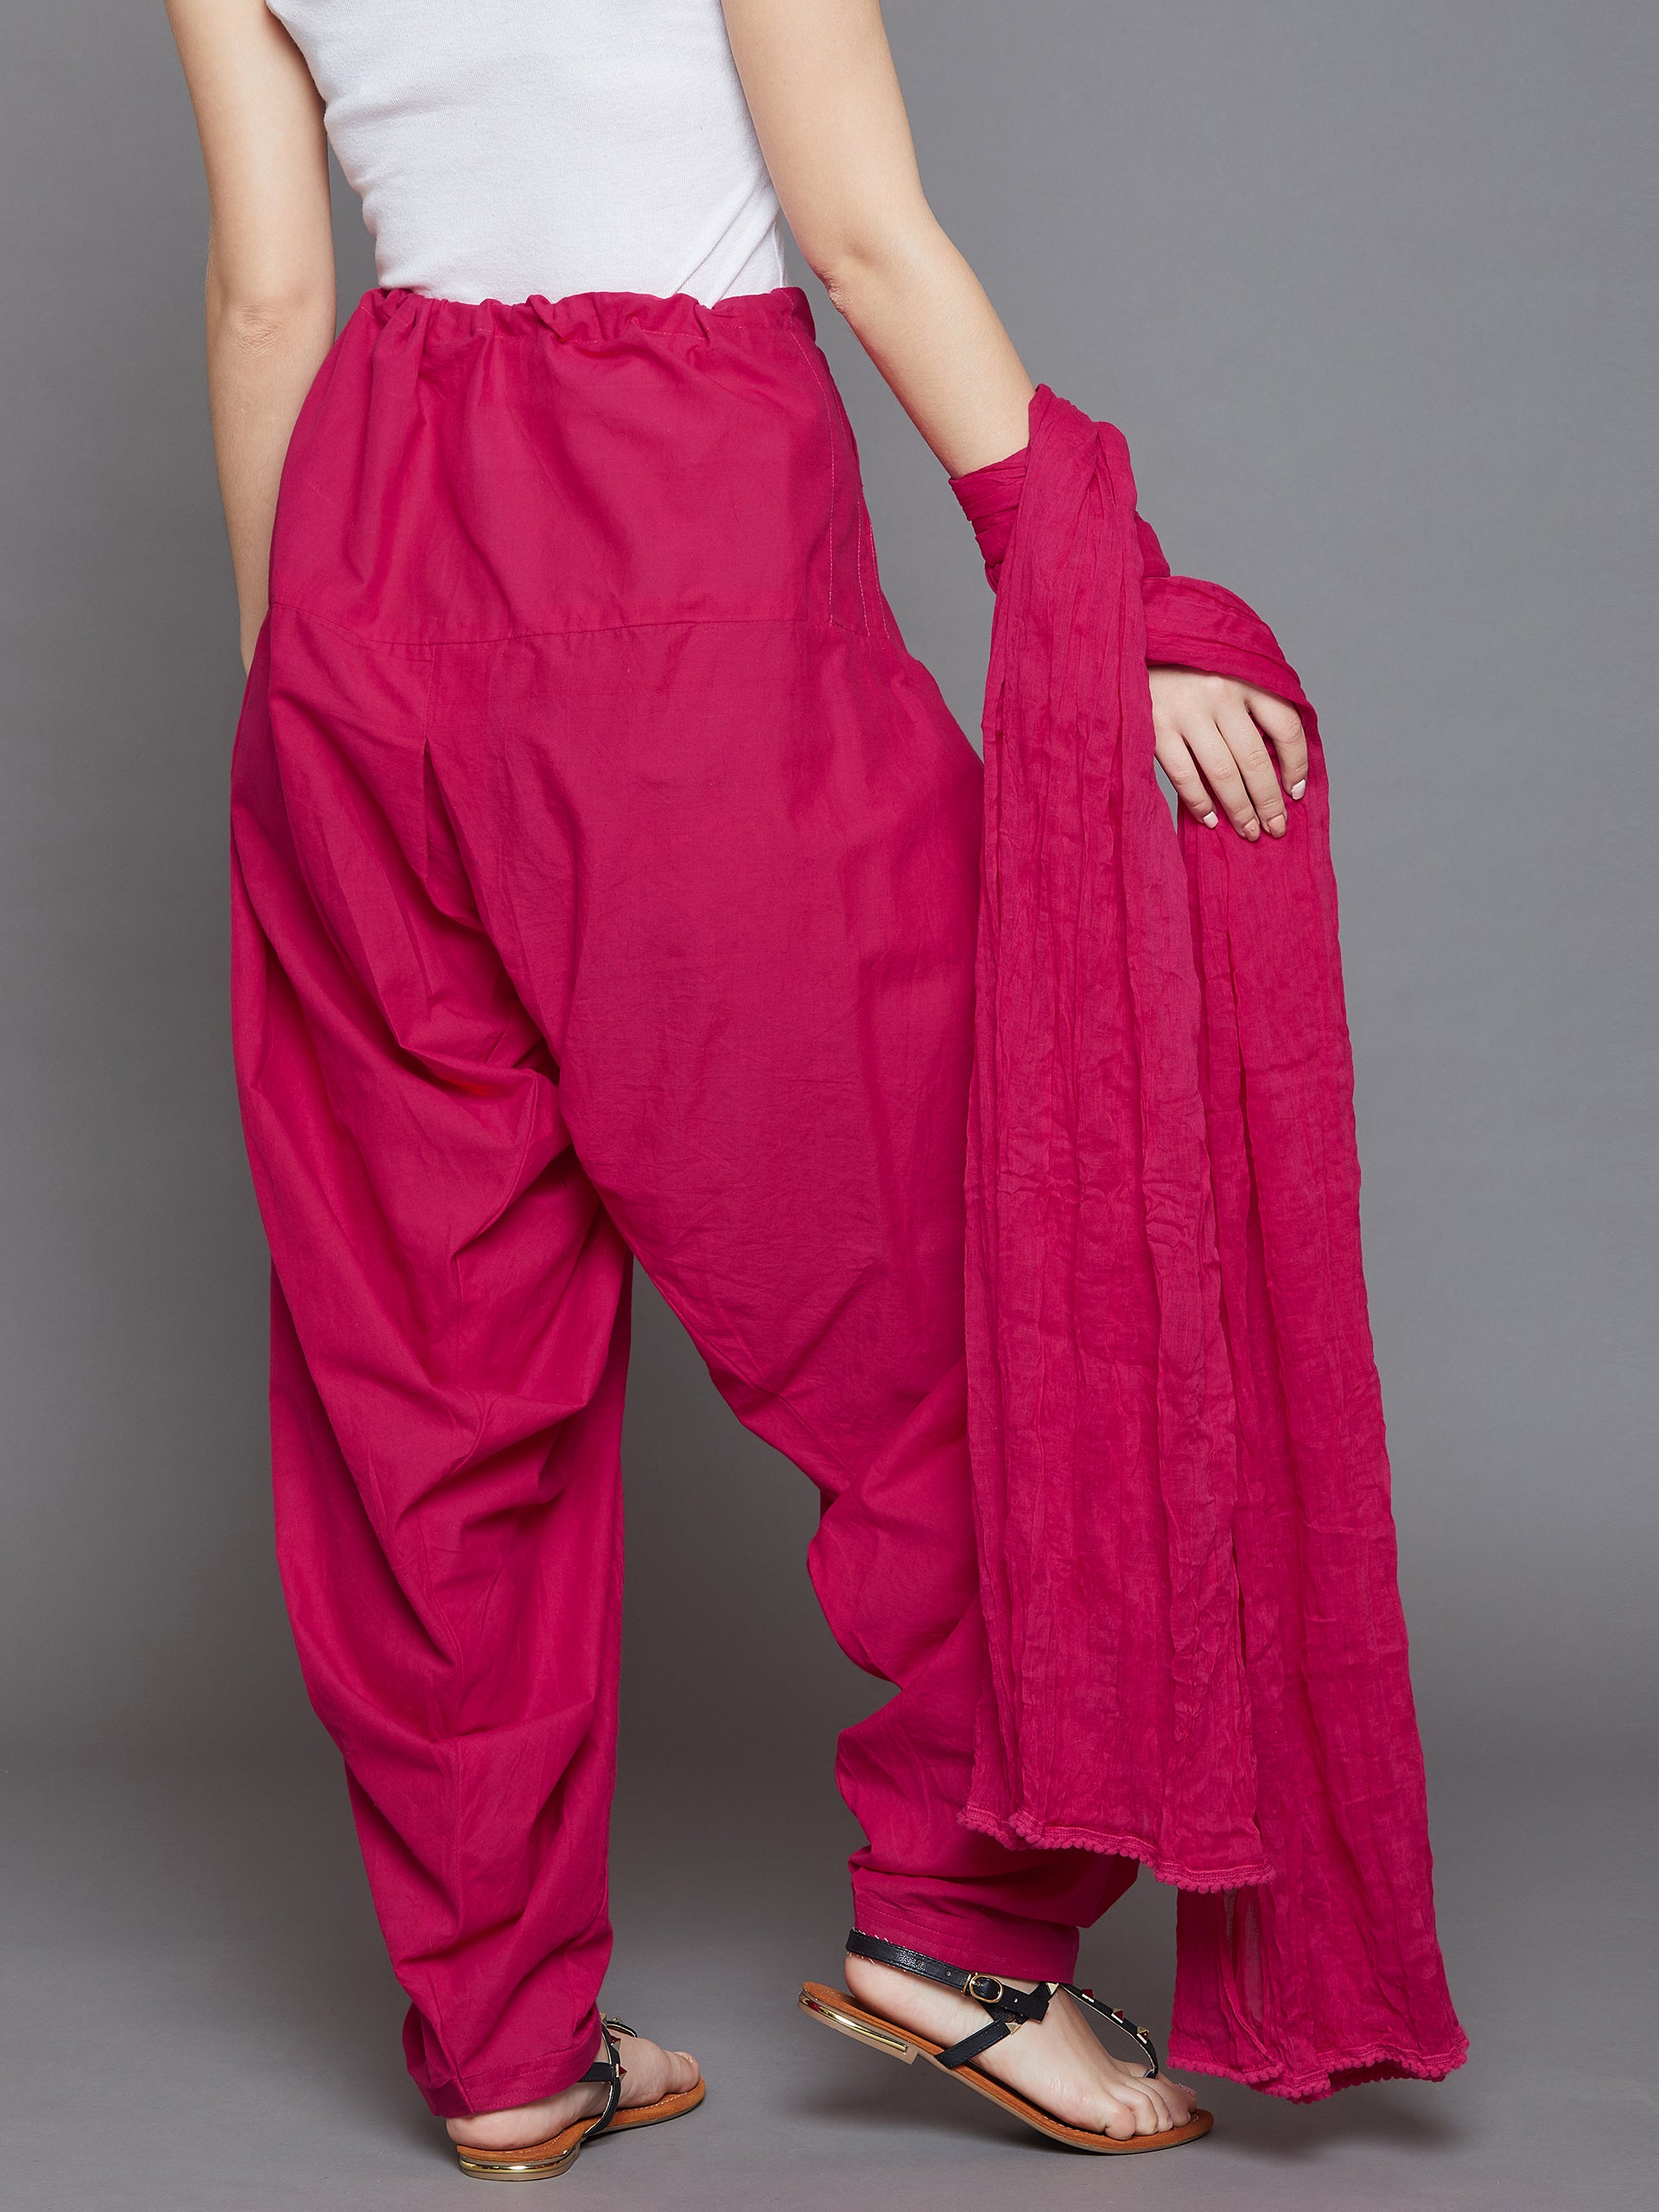 Cotton Blend Men's Patiala Style Pajama | Exotic India Art